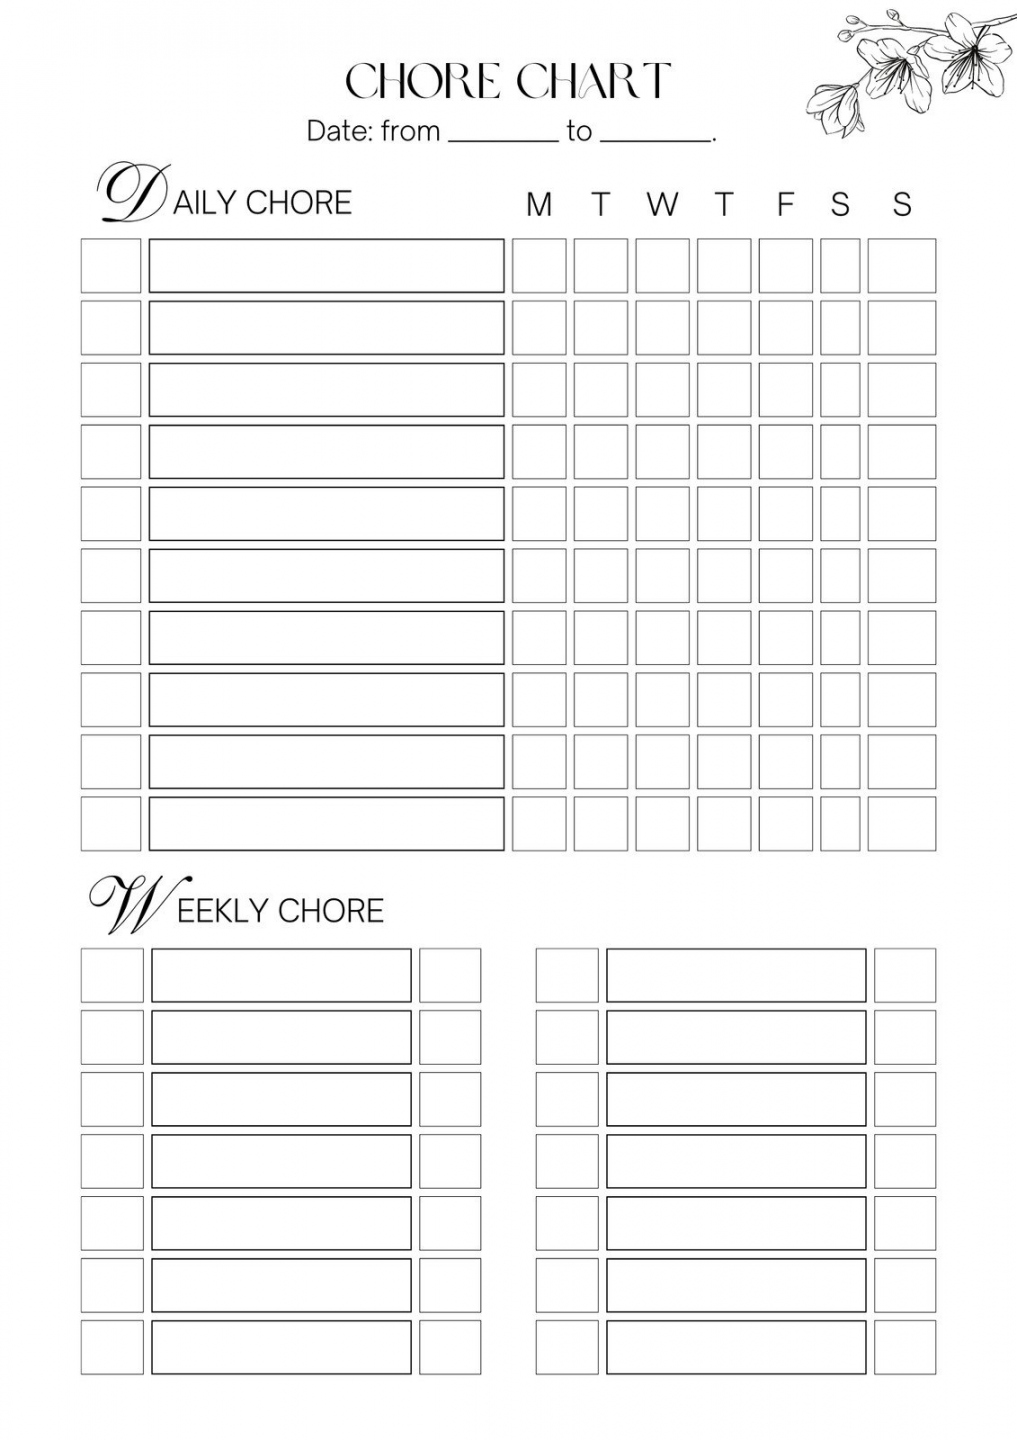 Free customizable chore chart templates to print  Canva - FREE Printables - Family Chore Chart Printable Free